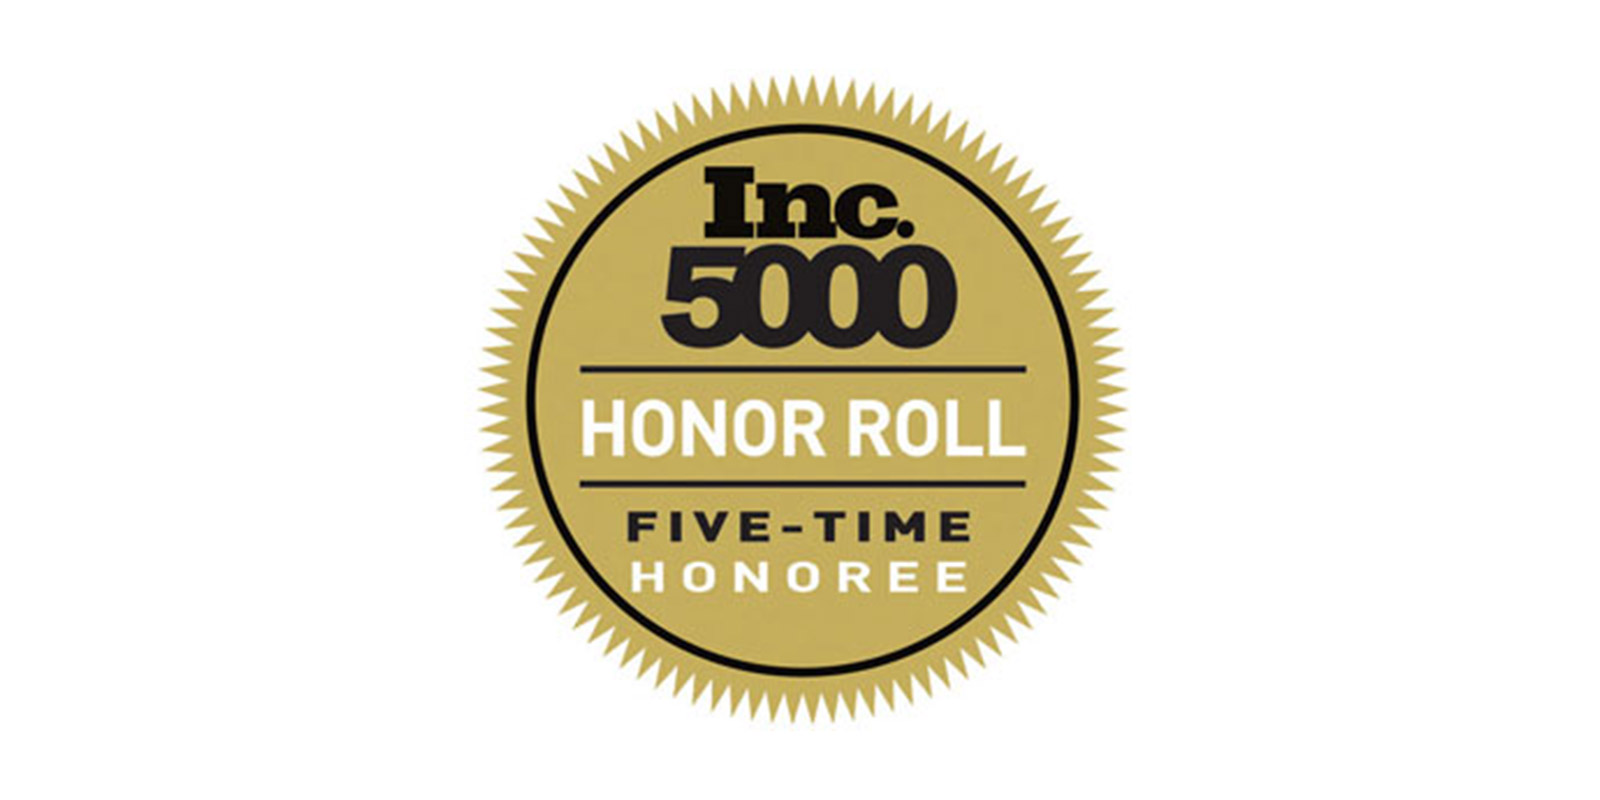 Inc 5000 award honor roll